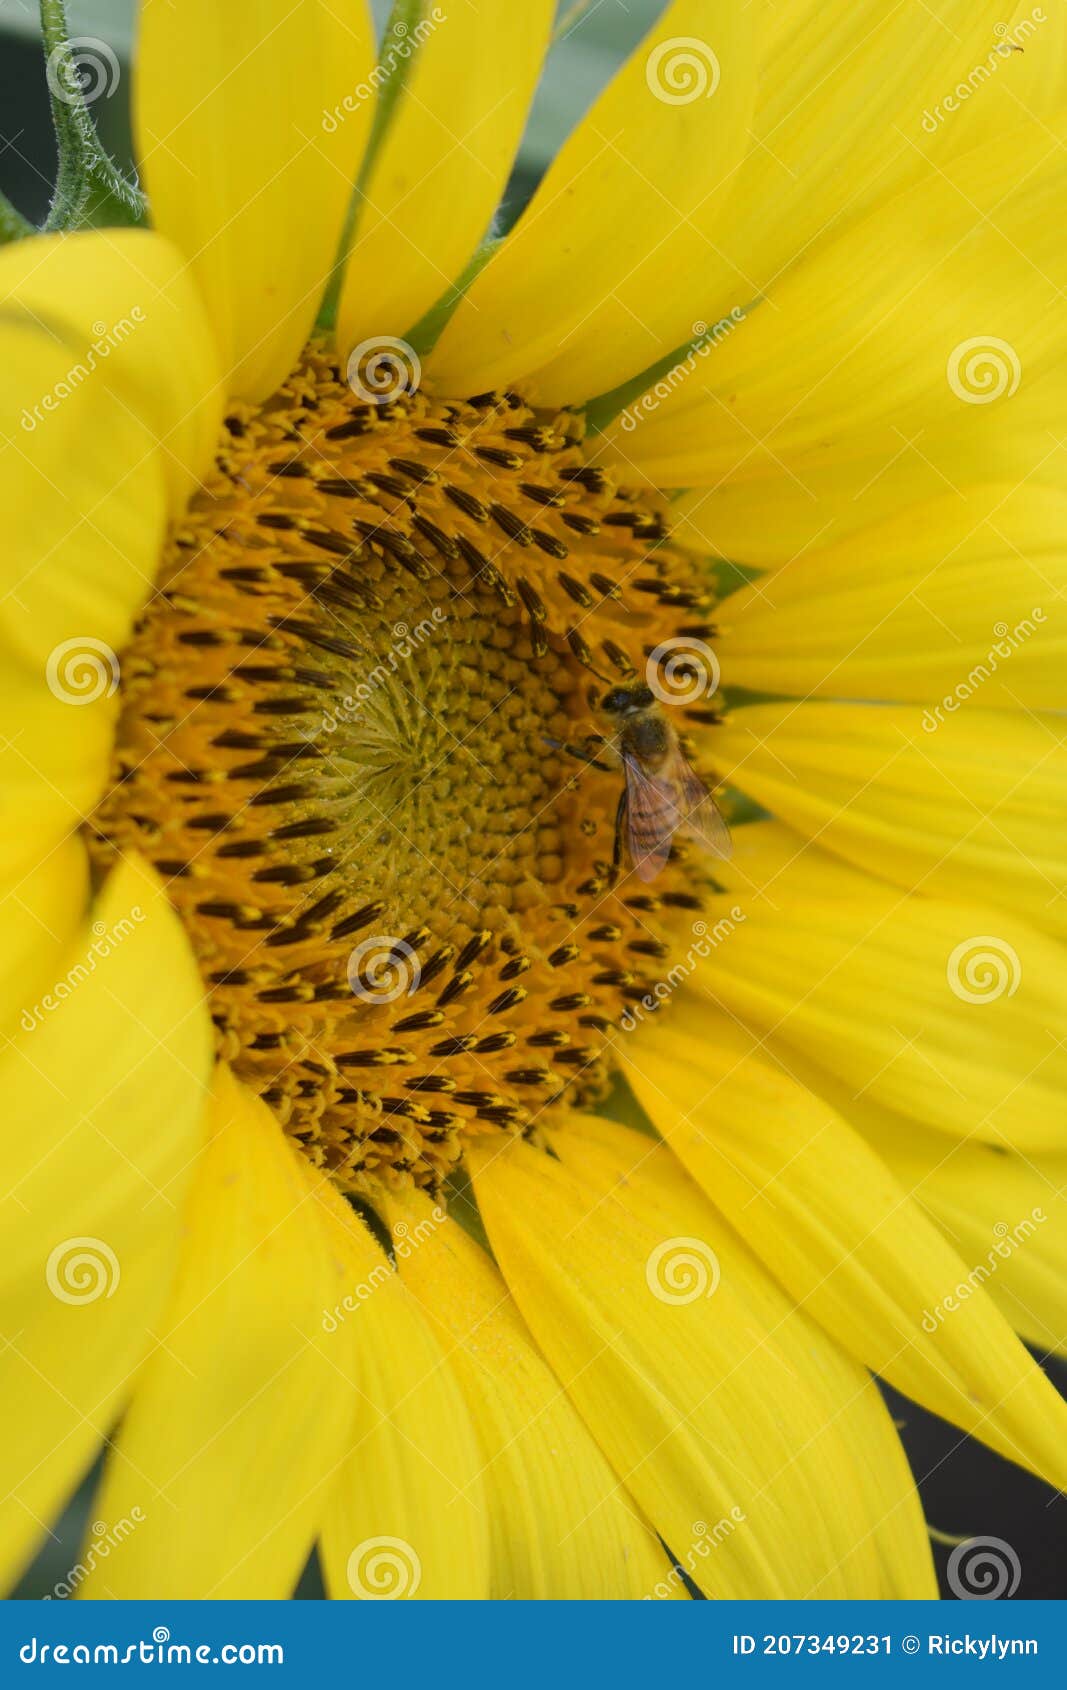 helianthus, single huge sunflower